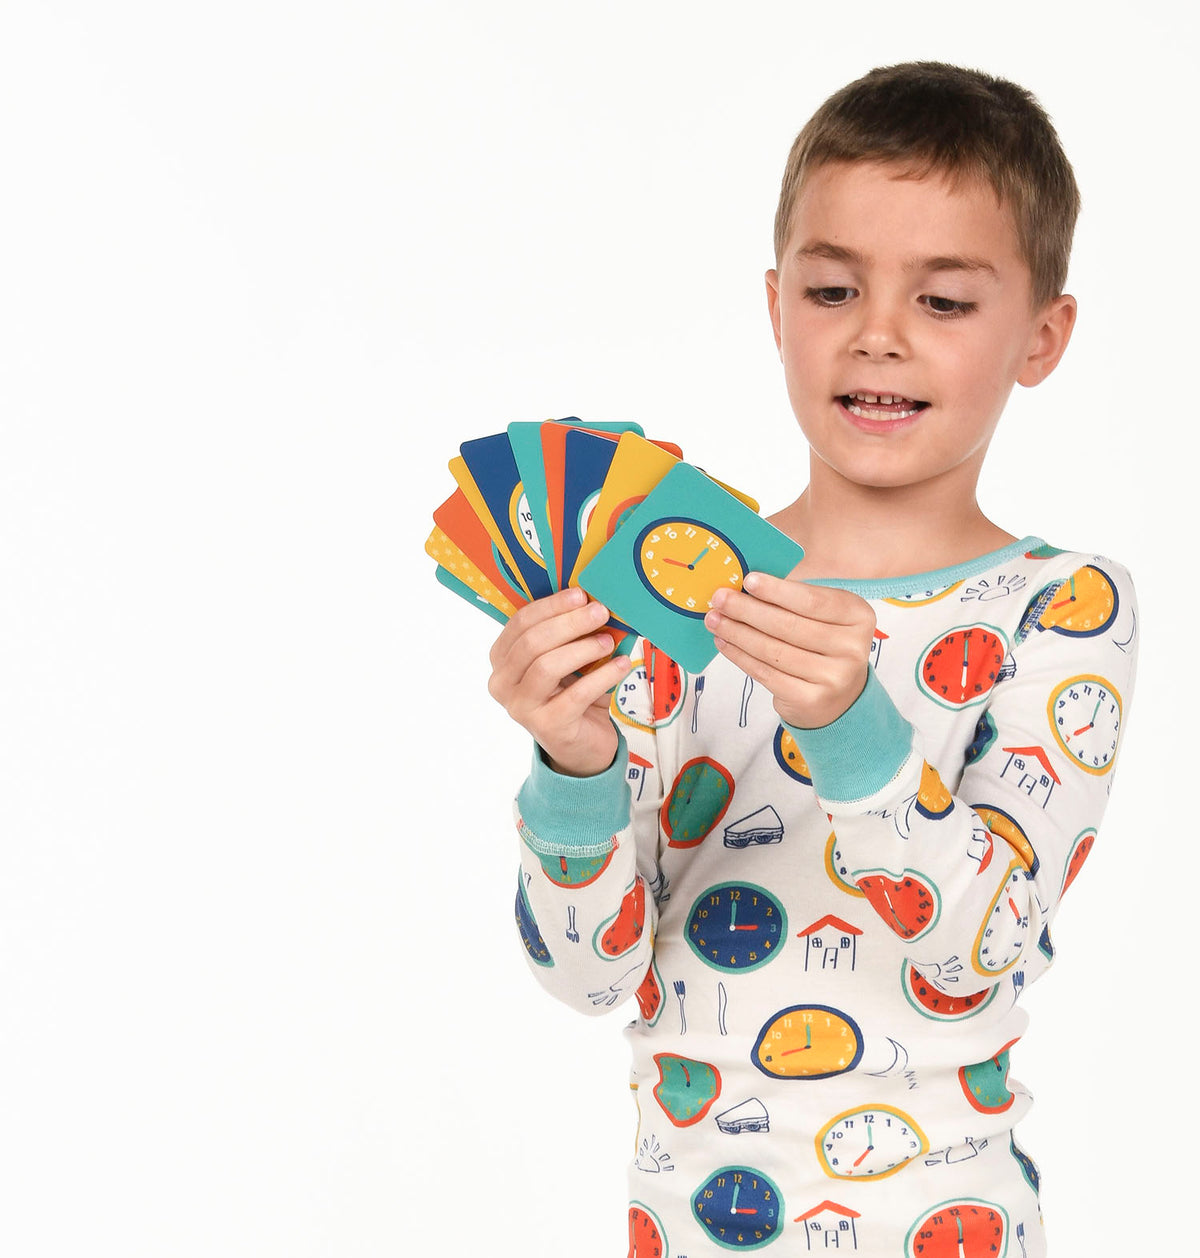 Smart Dreams - Clock pajamas and matching flash cards